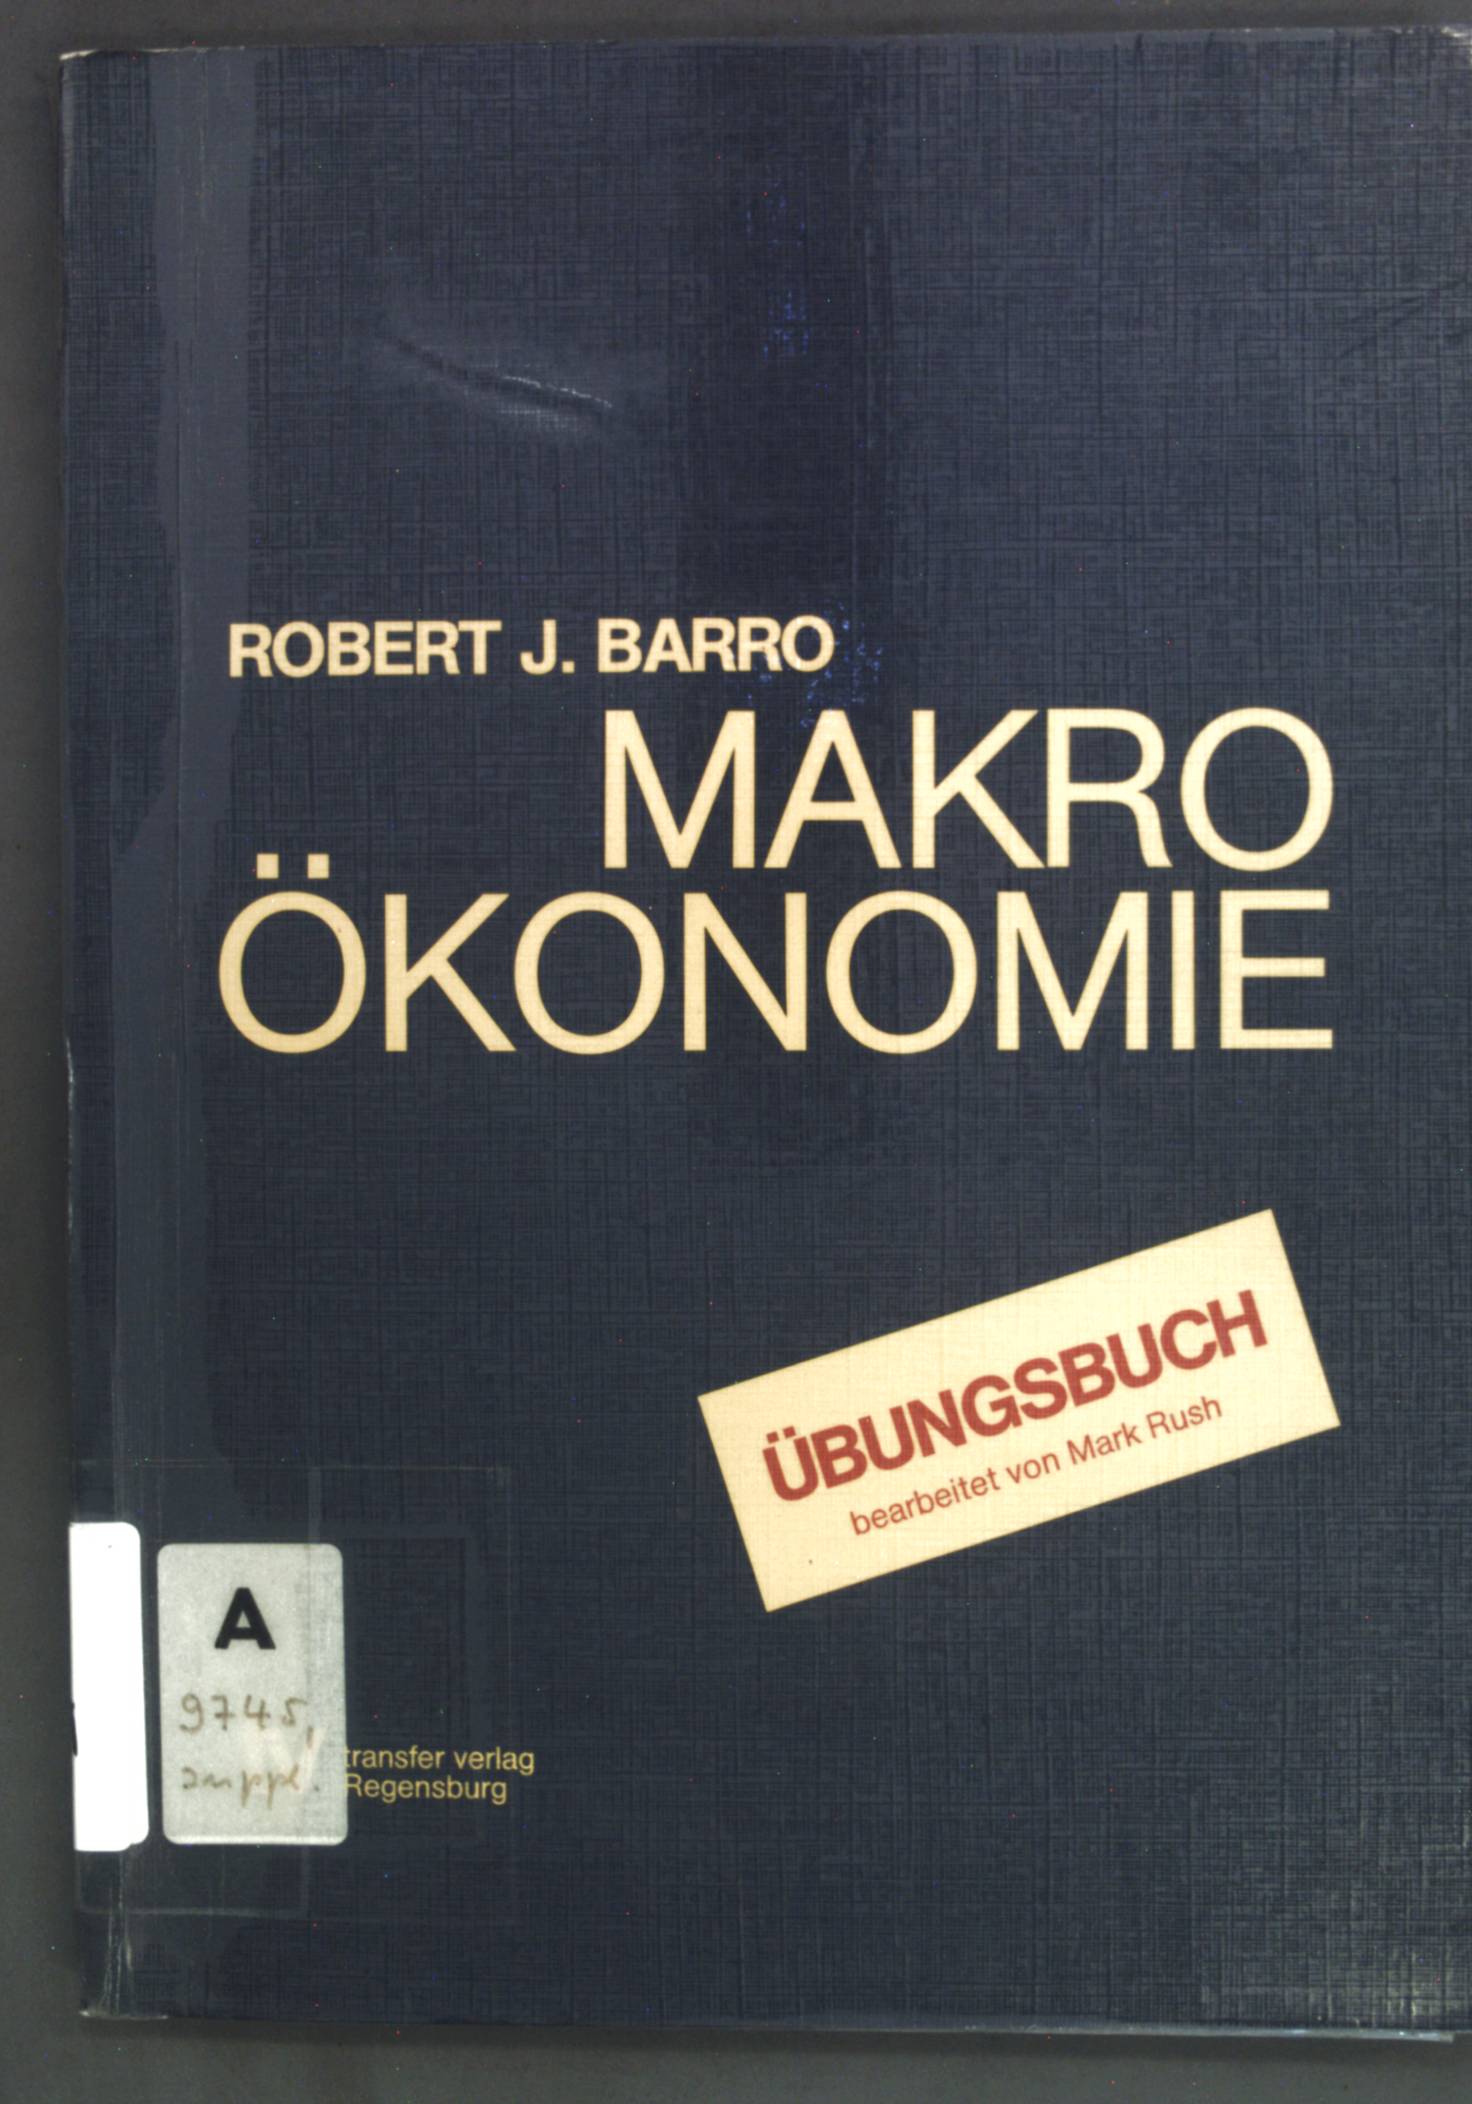 Übungsbuch zu Robert J. Barro Makroökonomie; - Rush, Mark (Bearb.)